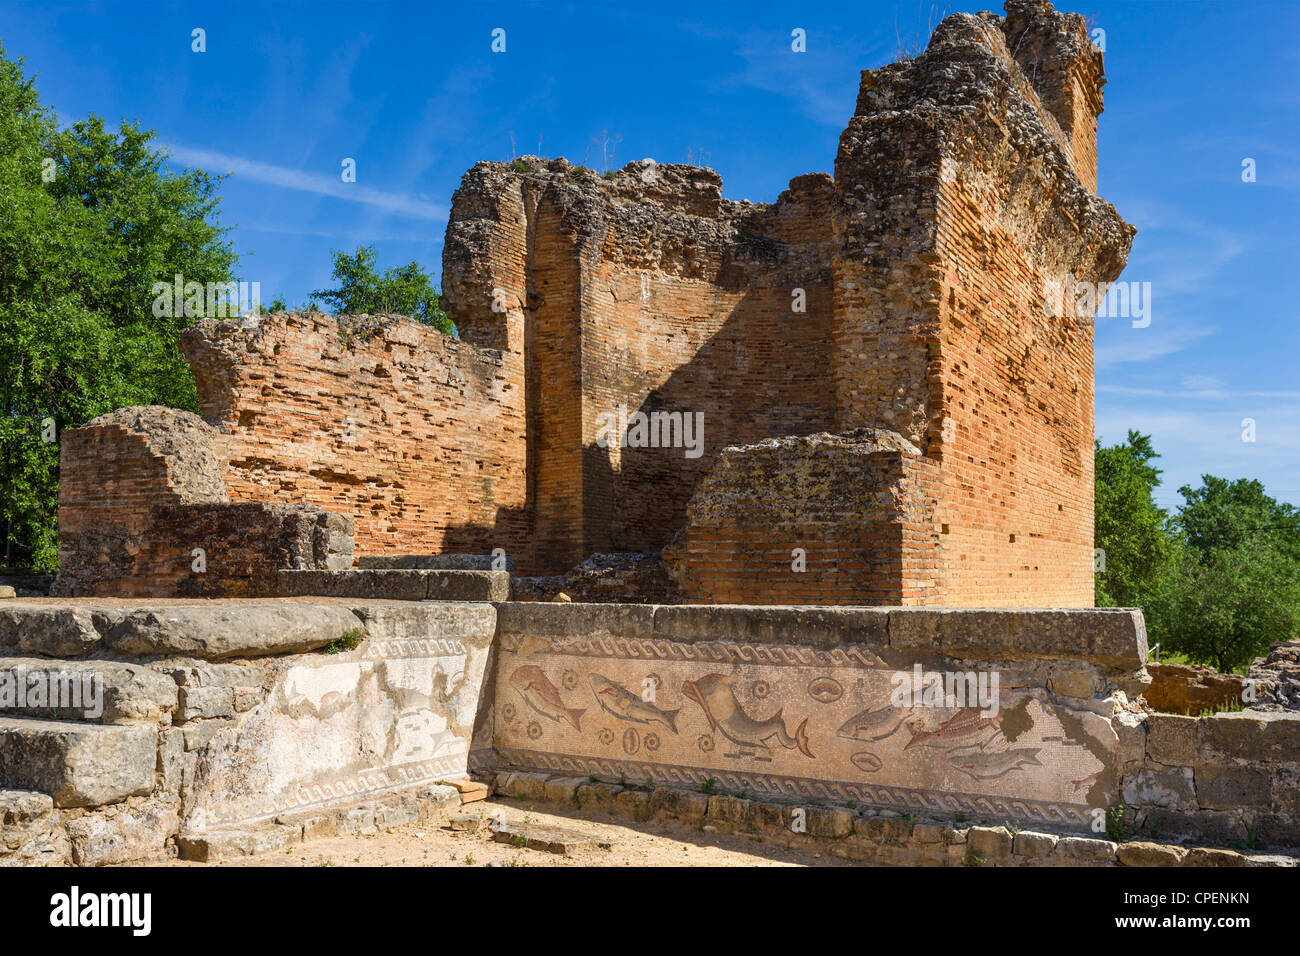 Temple and mosaics at the Roman Ruins of Milreu in Estoi, Algarve, Portugal Stock Photo